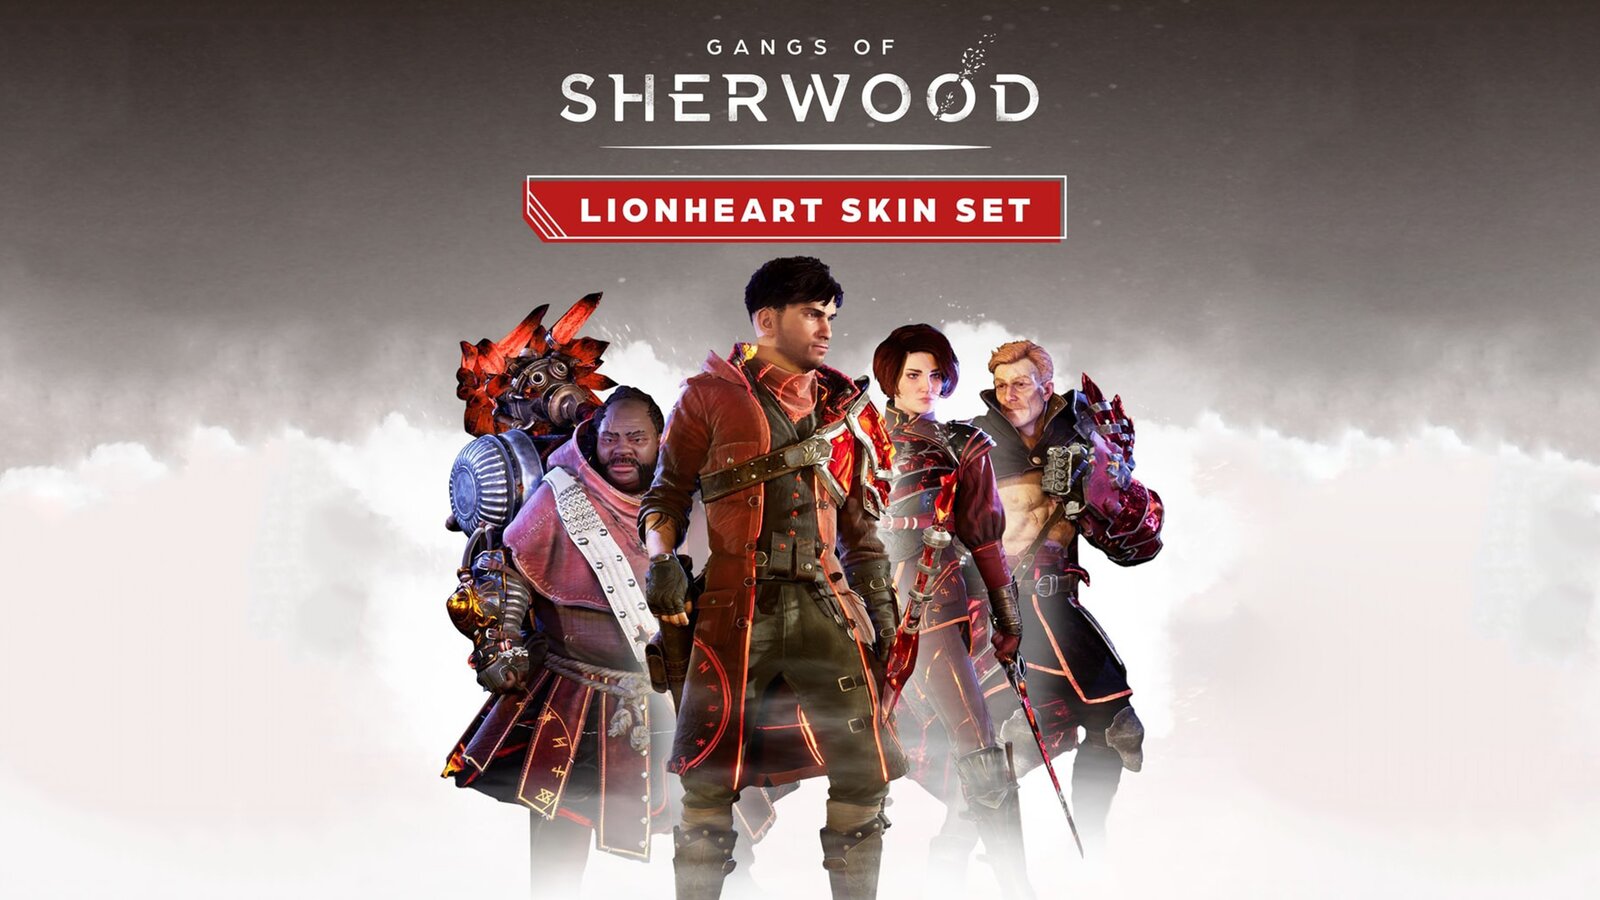 Gangs of Sherwood - Lionheart Skin Set